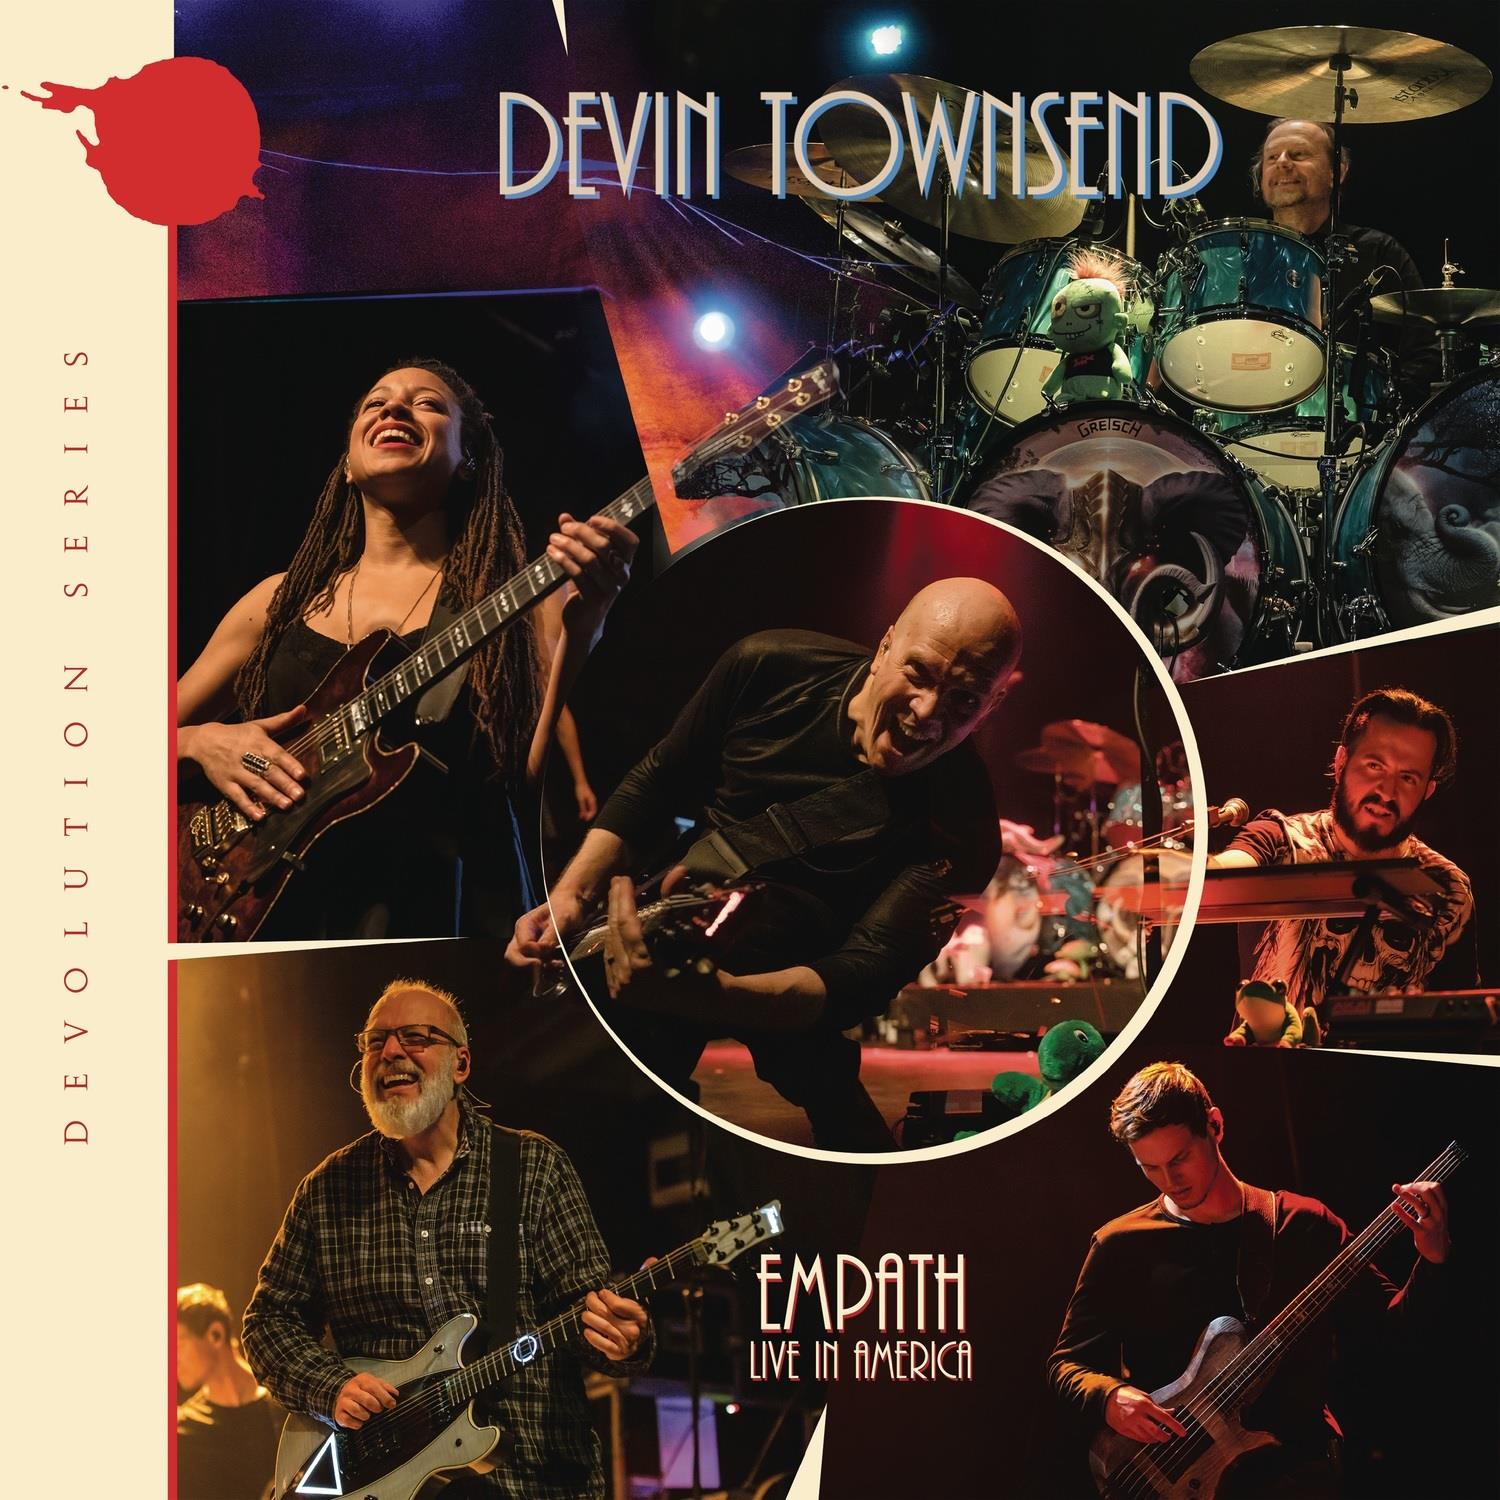 Devolution Series 3: Empath Live In America by Devin Townsend (CD)